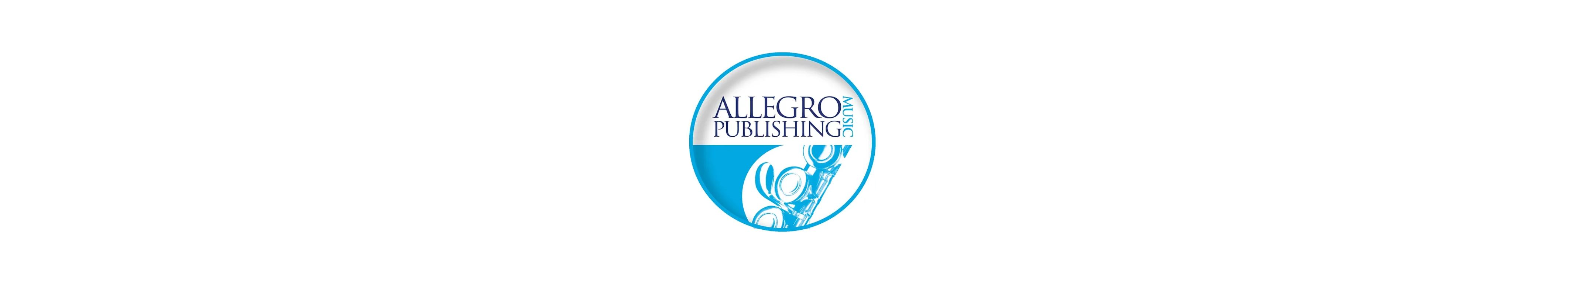 Allegro Publishing